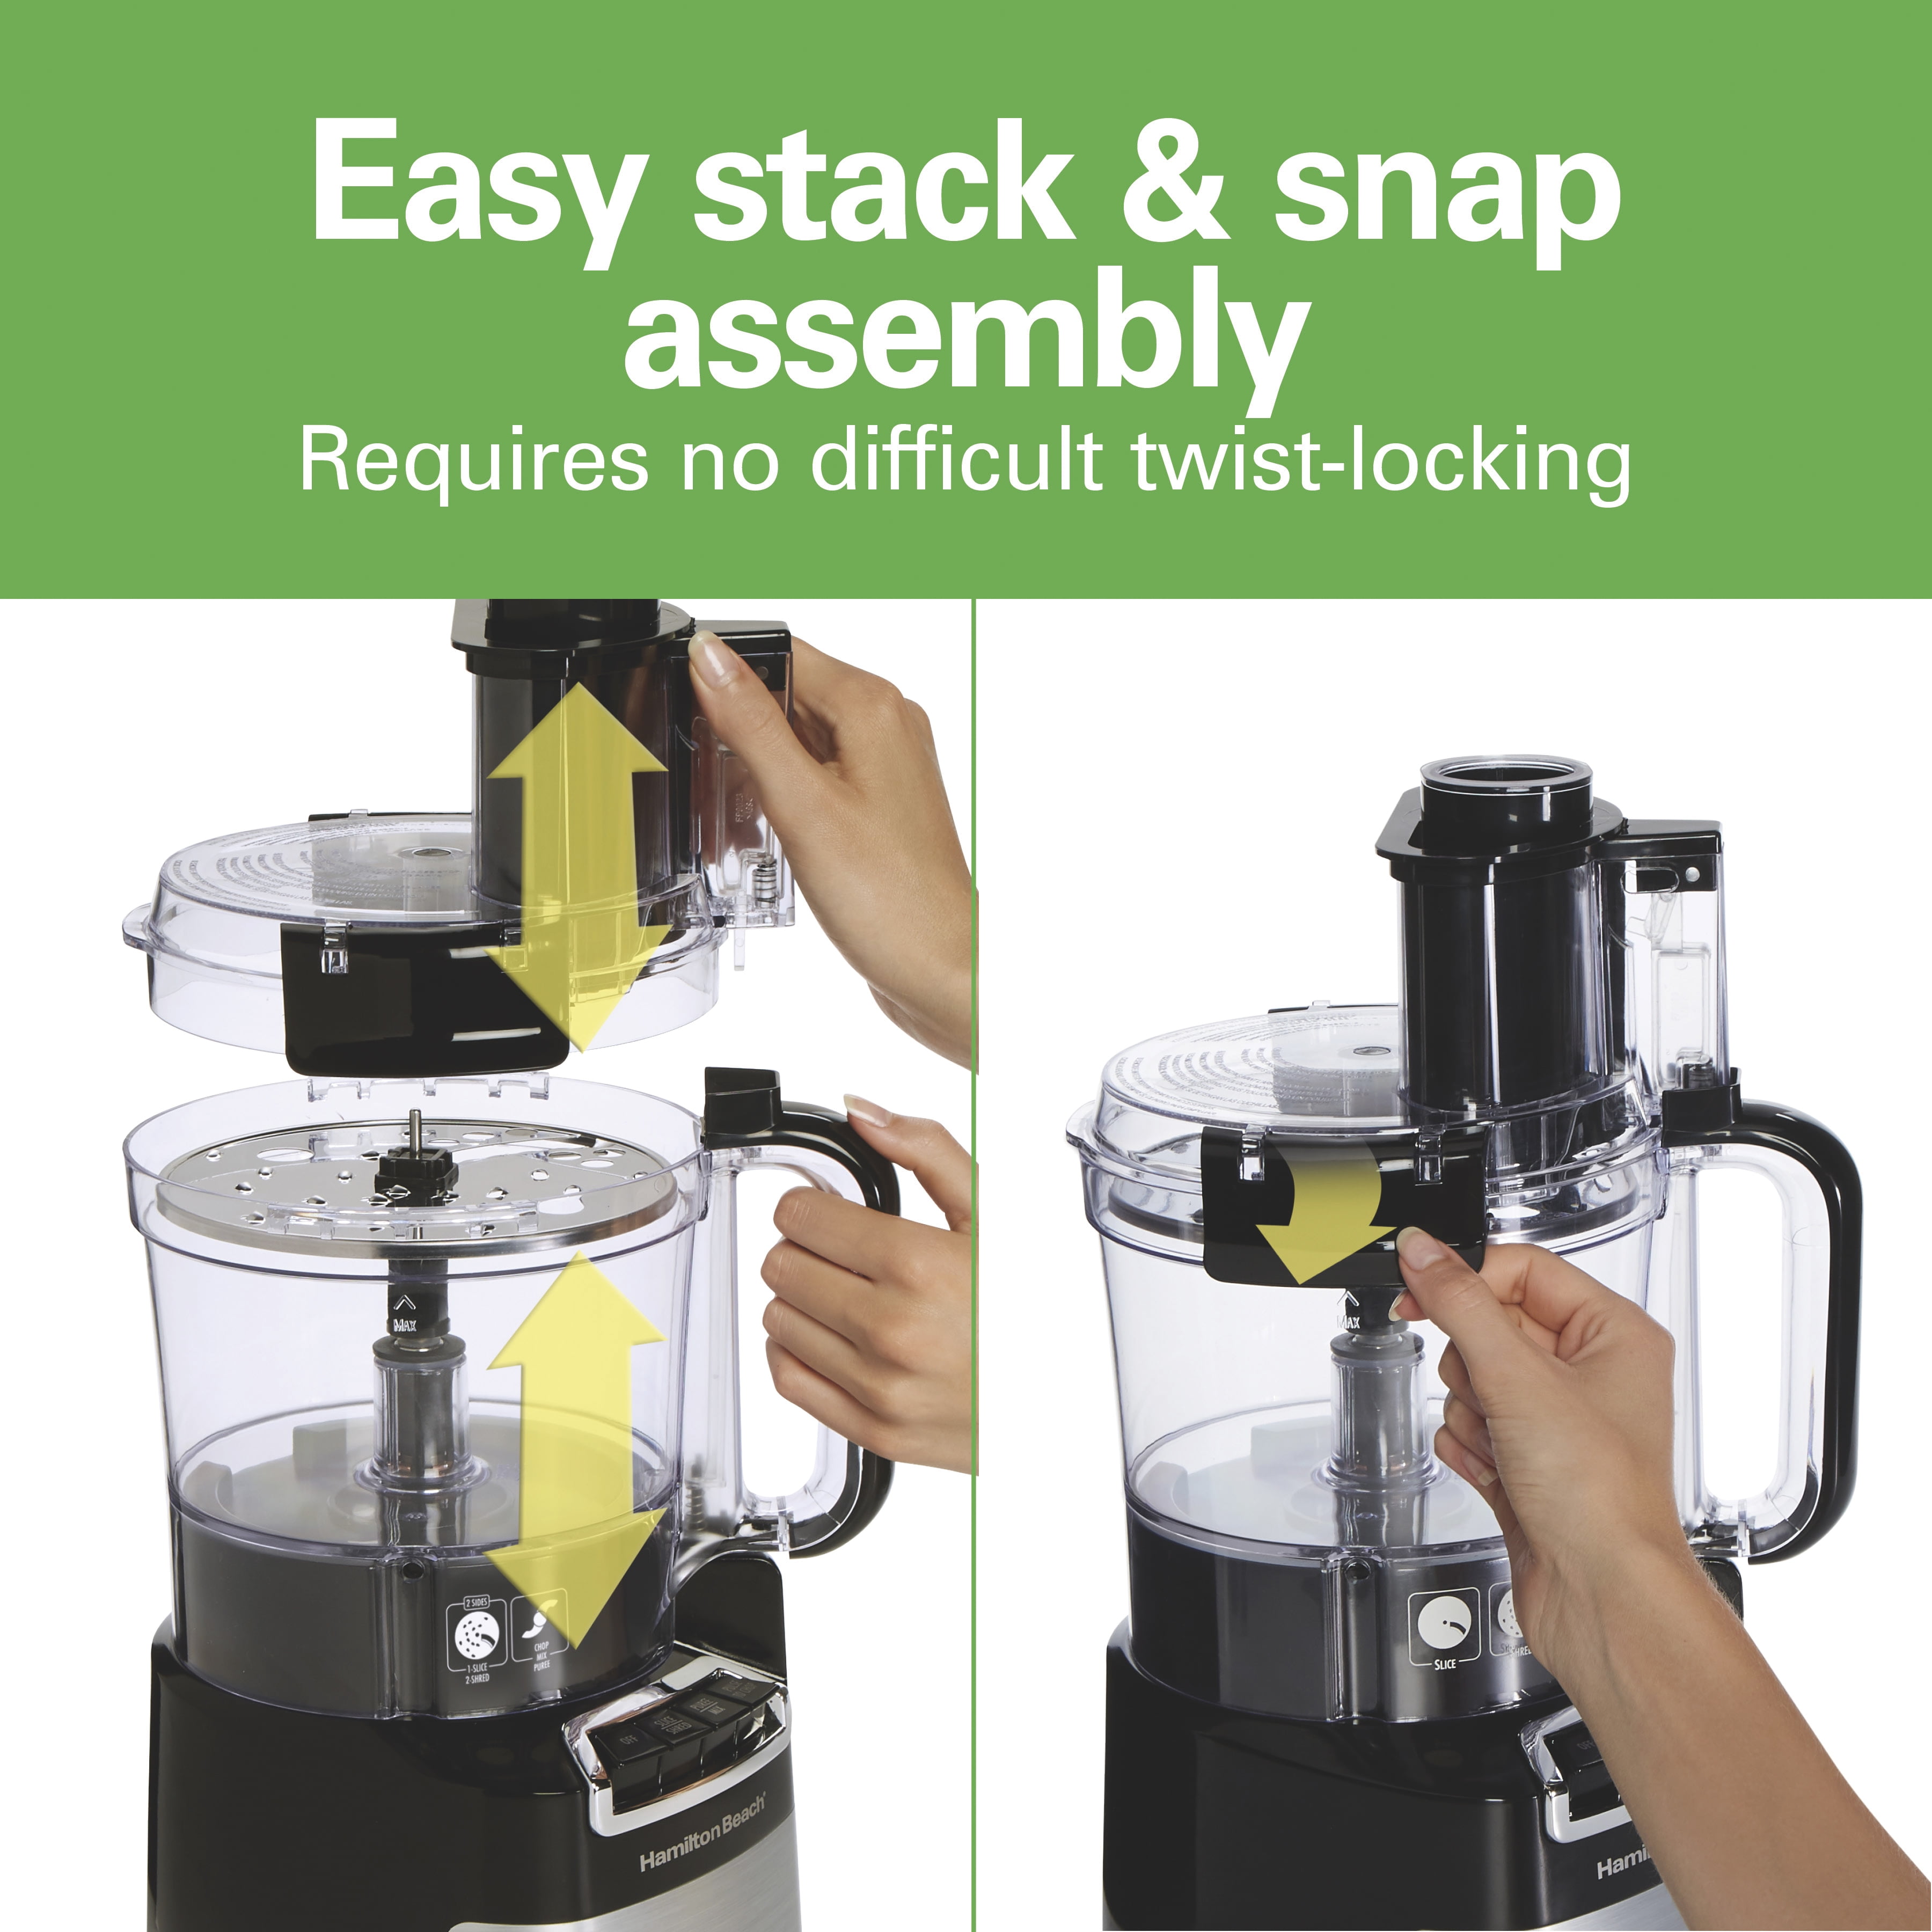 Hamilton Beach Stack & Snap Food Processor with Bowl Scraper, 10 Cup Capacity, Black, New, 70822f